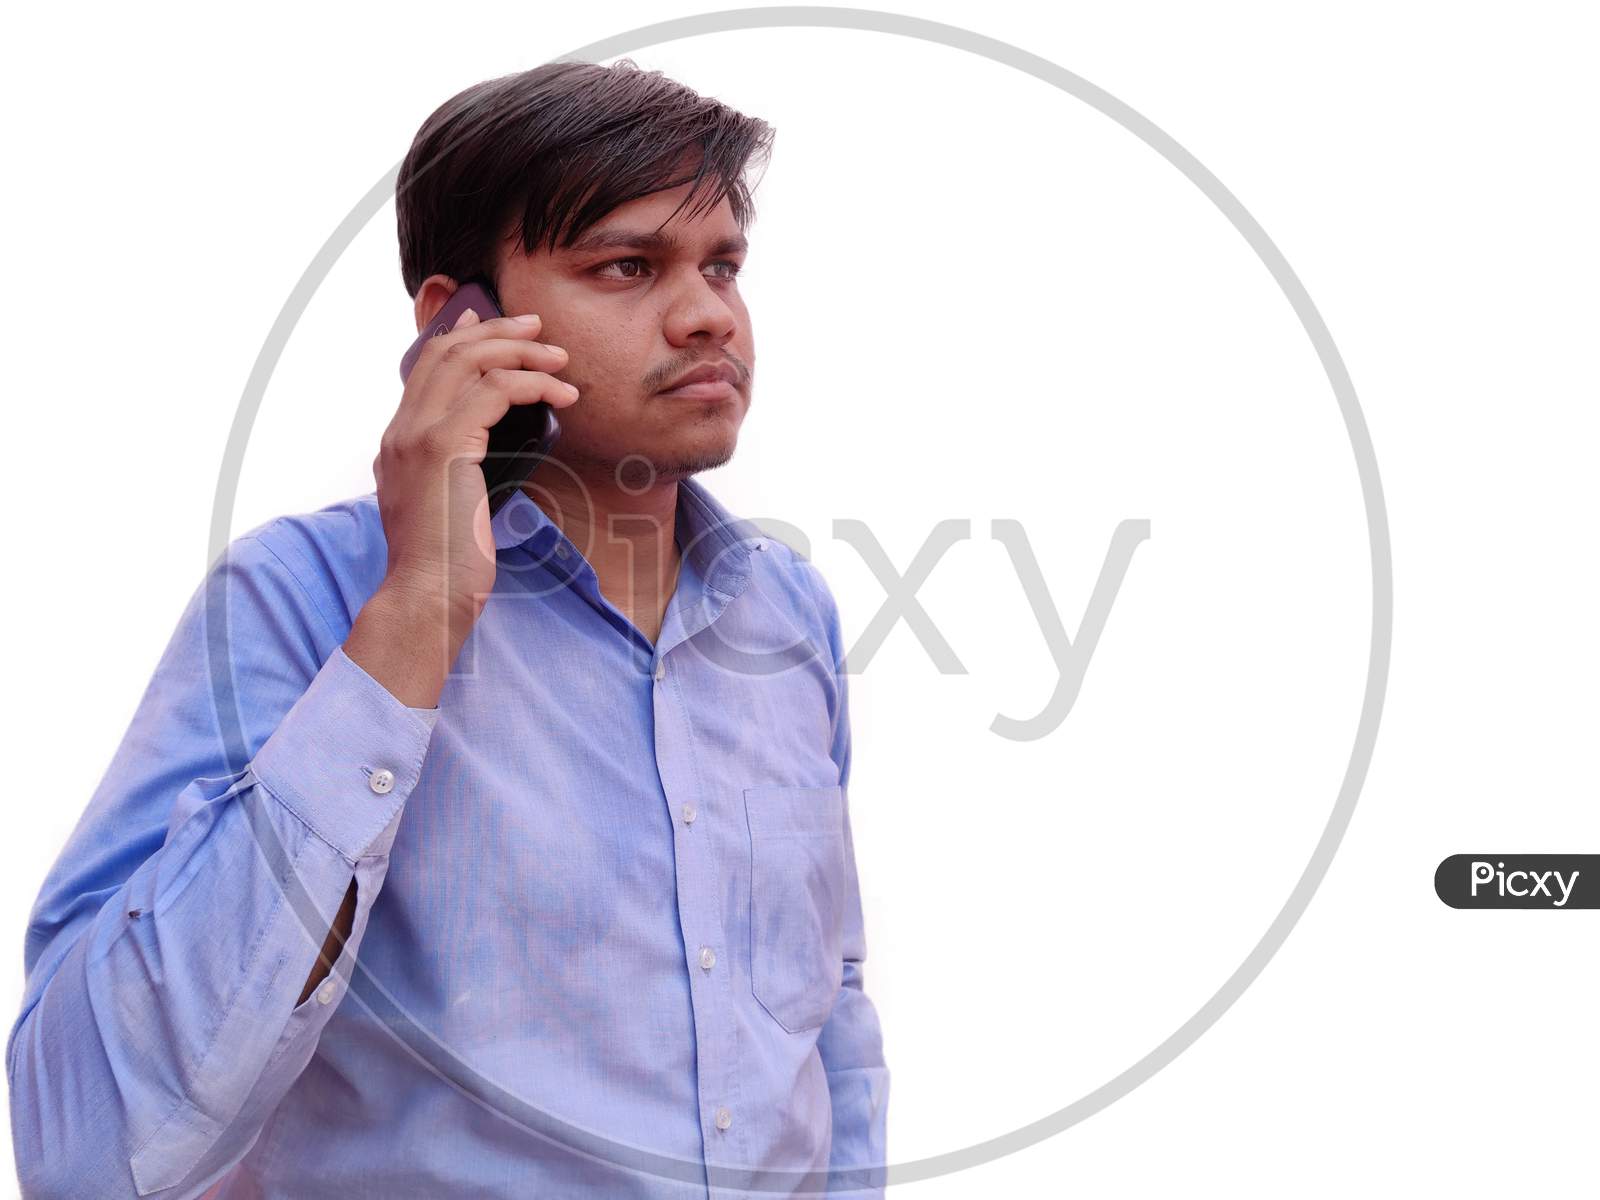 Indian Man talking on phone wearing shirt Isolated on White background